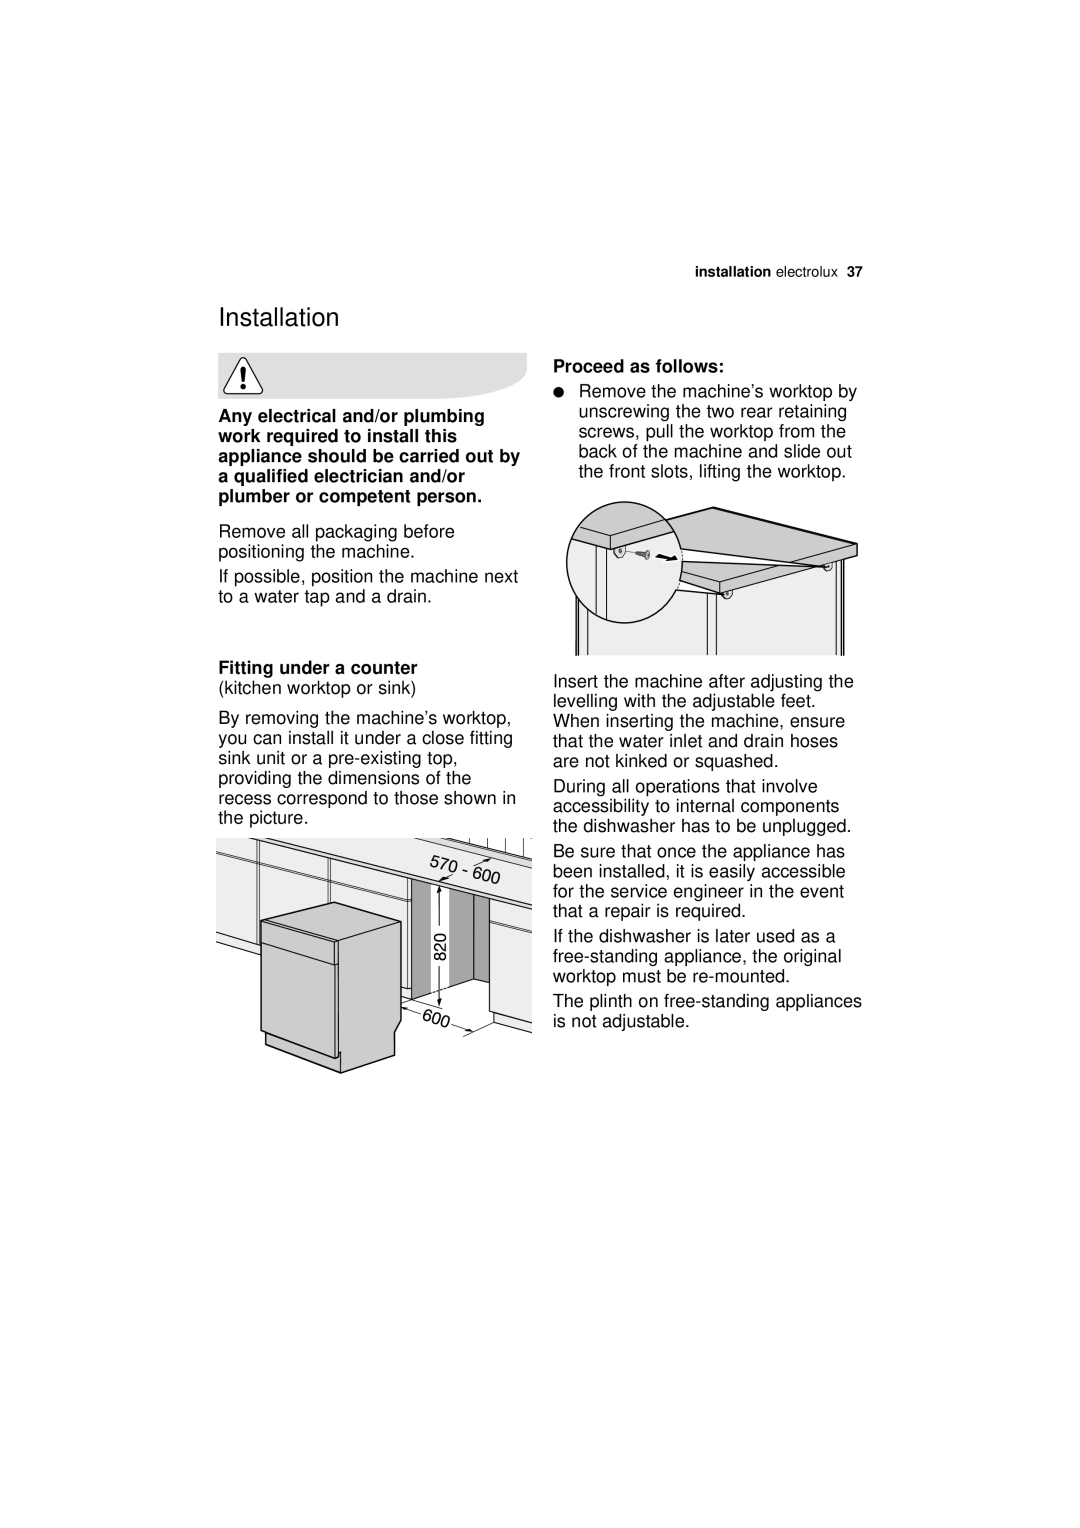 Electrolux ESF 65020 user manual Installation, Proceed as follows, installation electrolux 